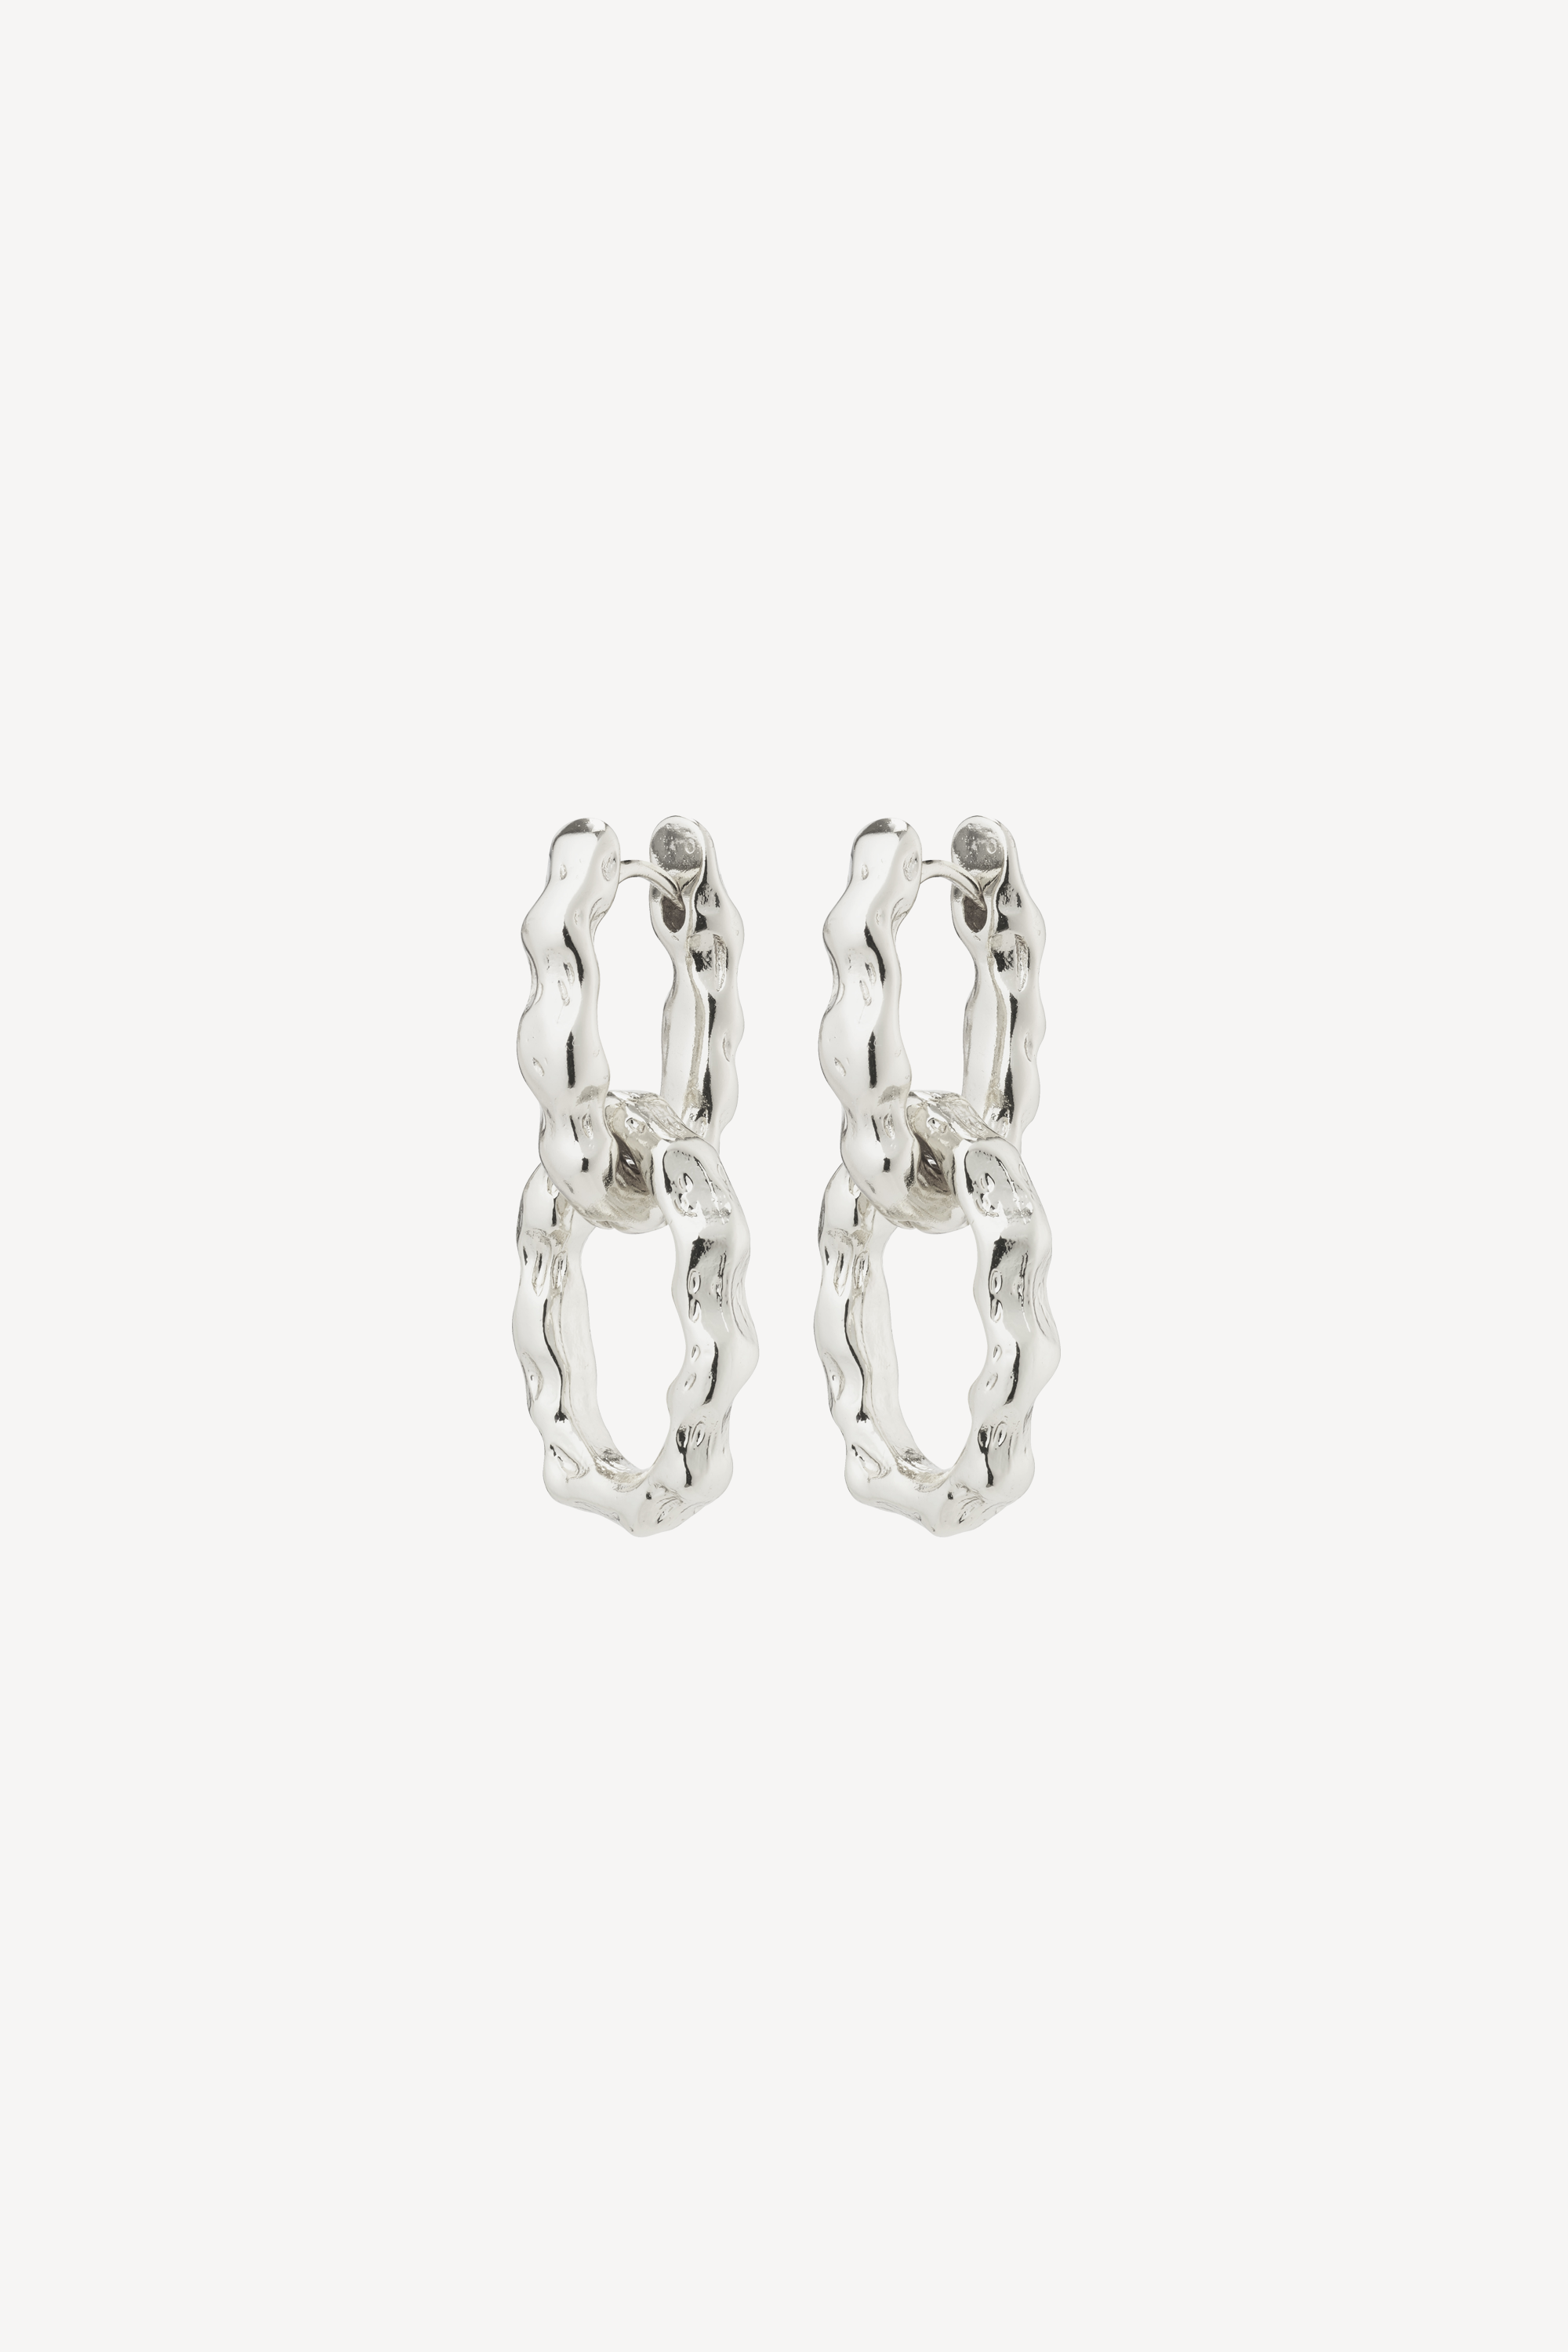 Reflect Earrings Silver (pair)